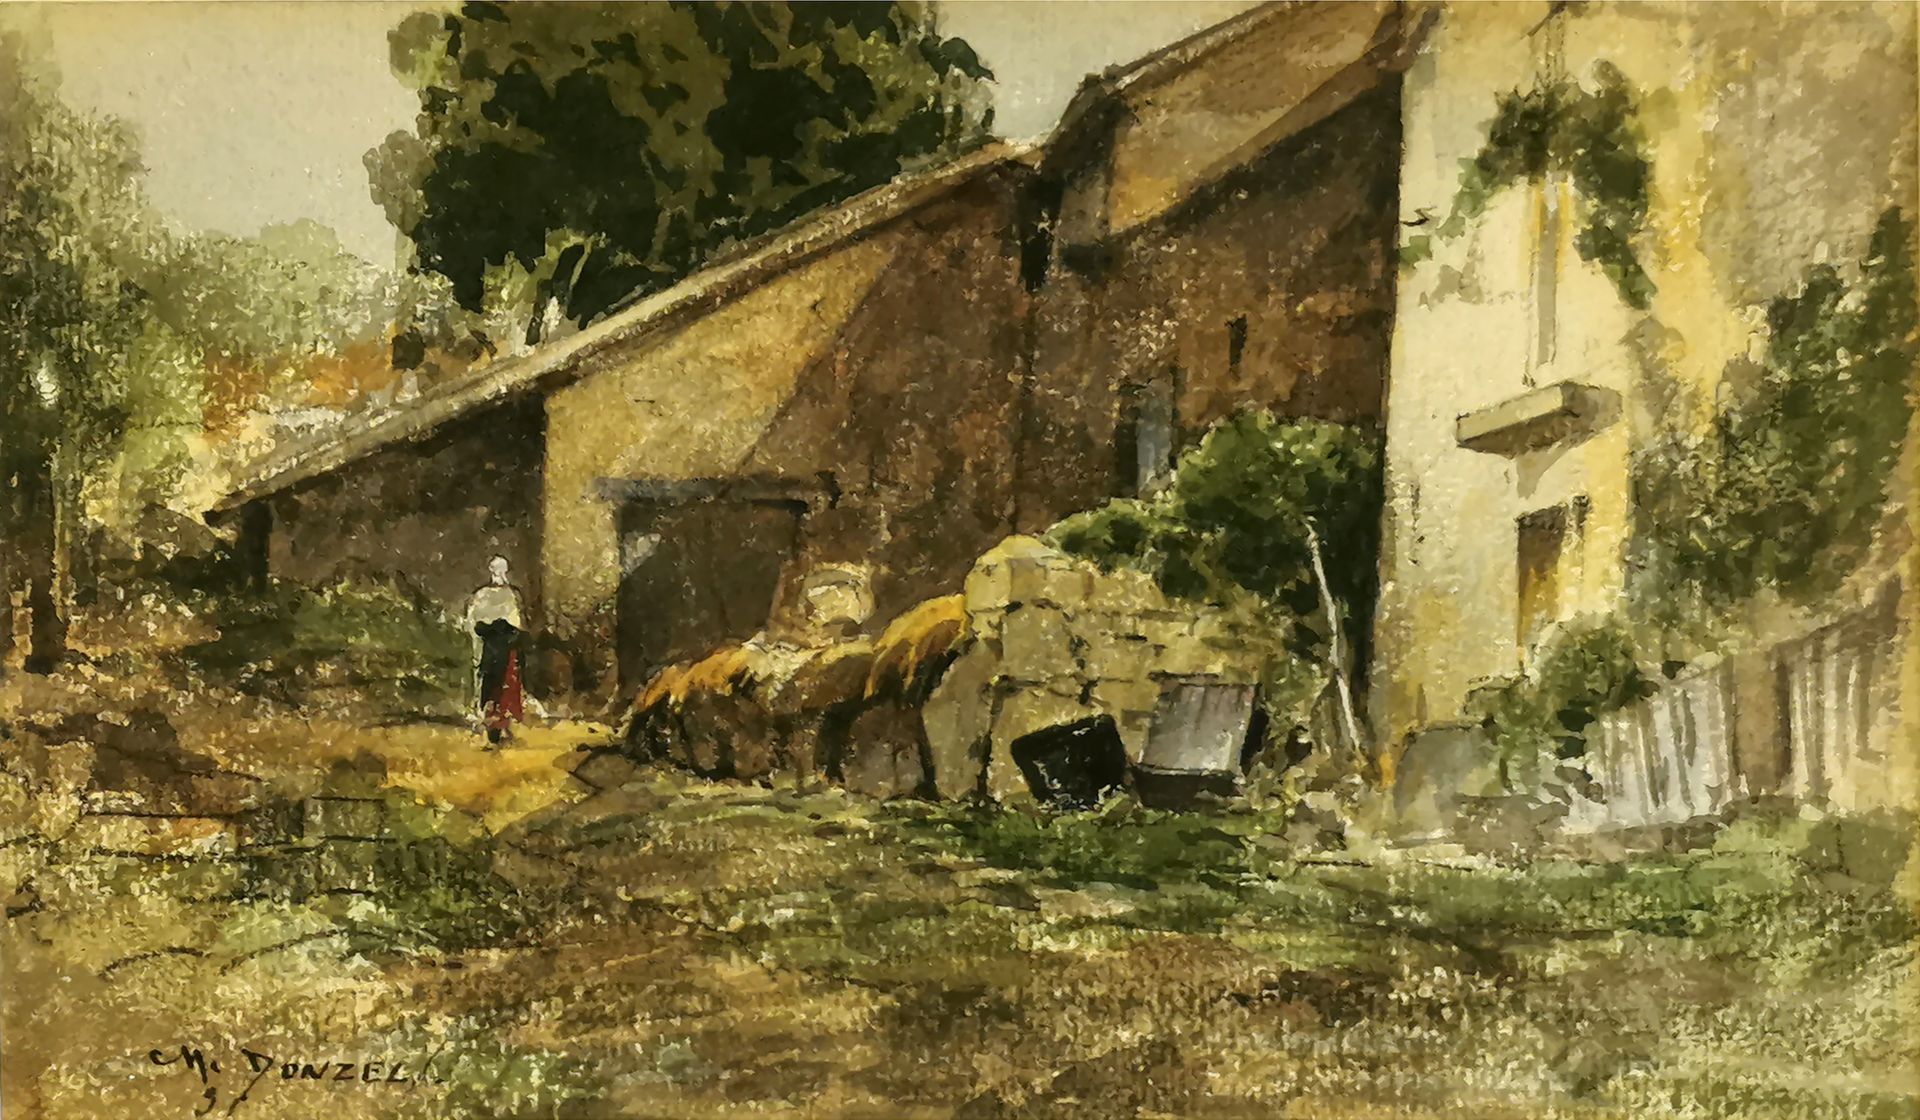 Null 查尔斯-唐泽尔 (1824-1889)

农场的景色

纸上水彩画，签名和日期为51

13,8 x 22,2 cm 正在观看

有框